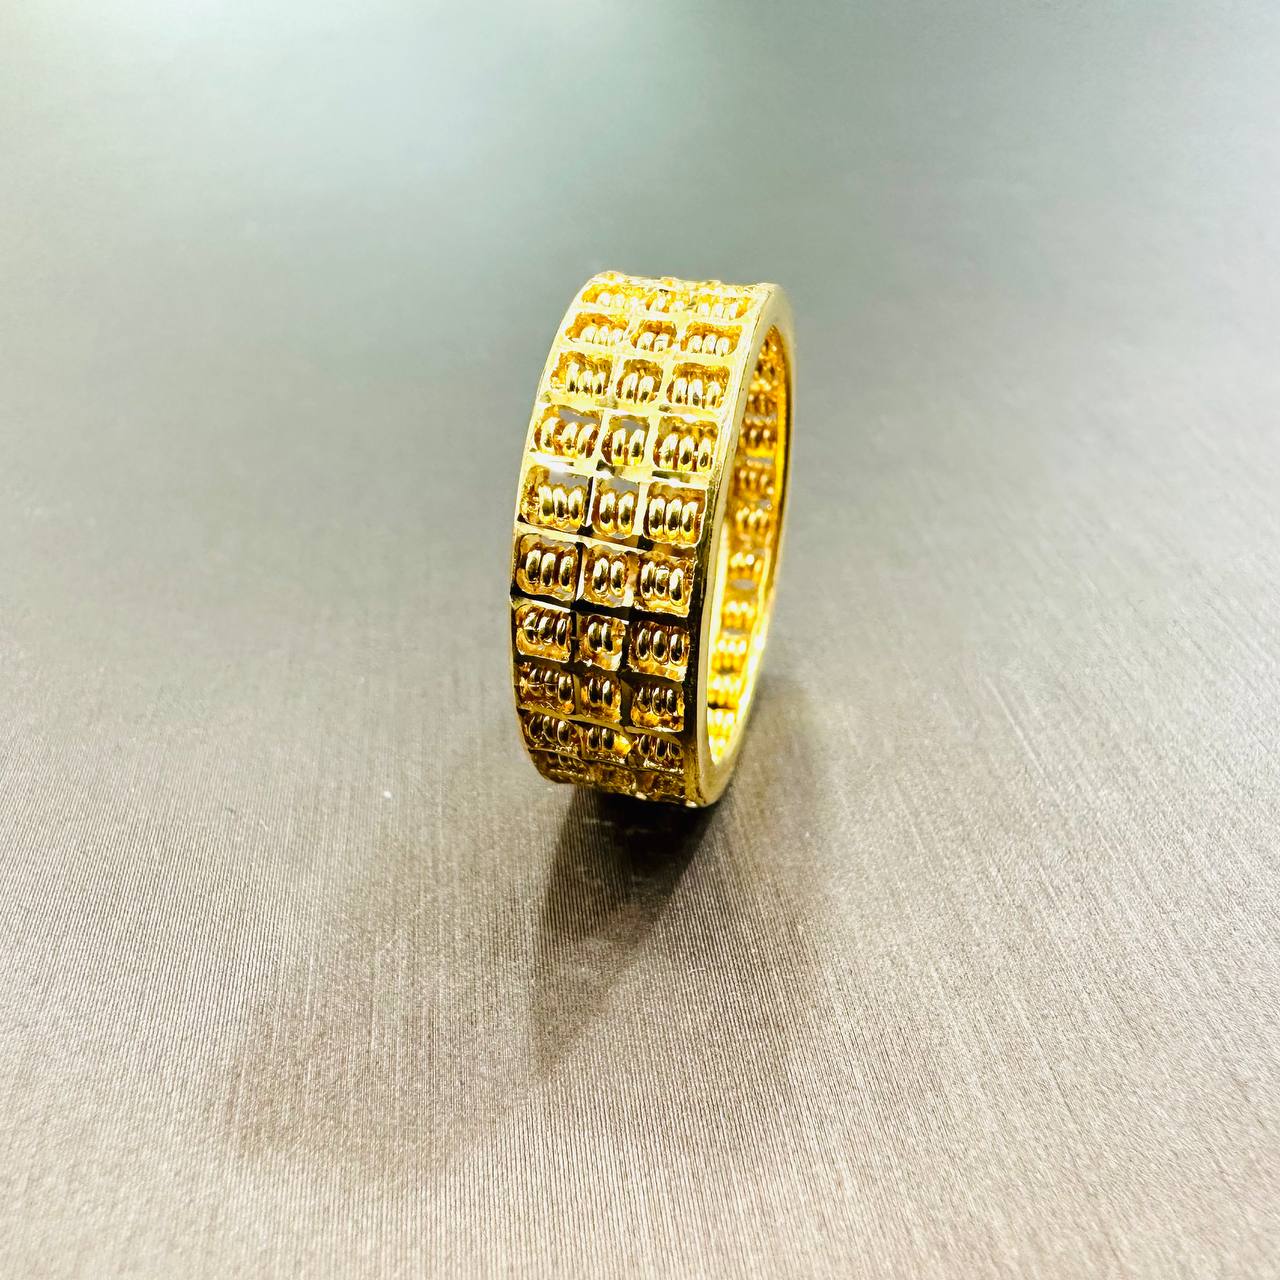 22k / 916 Gold Abacus Ring (Side Smooth Finish) V4-916 gold-Best Gold Shop